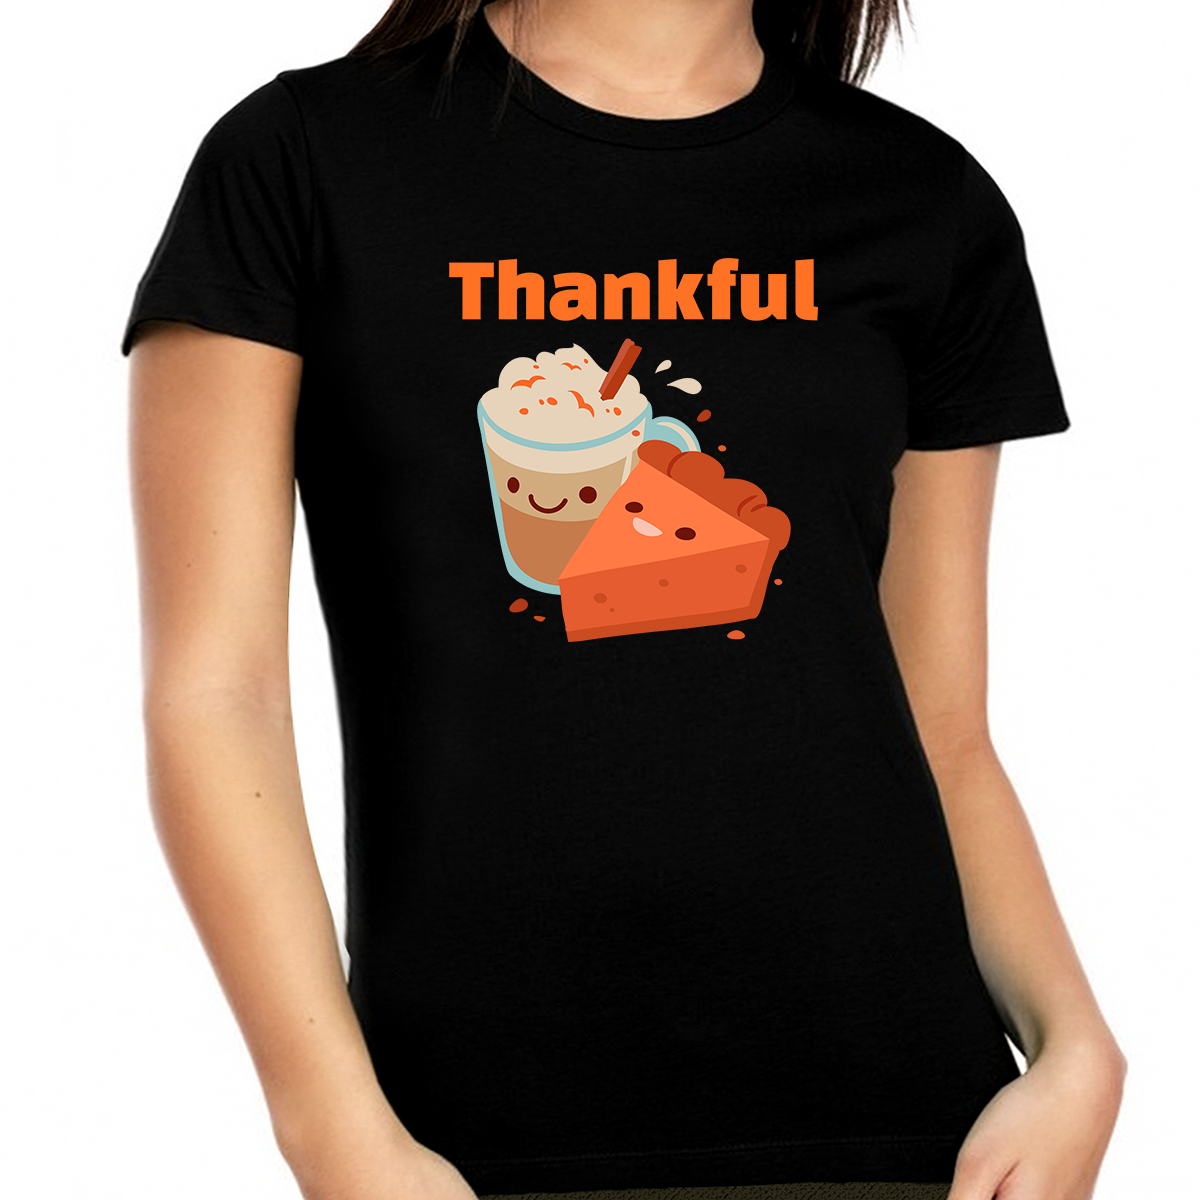 Womens Thanksgiving Shirt Plus Size Coffee Shirt Fall Shirt Funny Thanksgiving Shirts for Women Plus Size